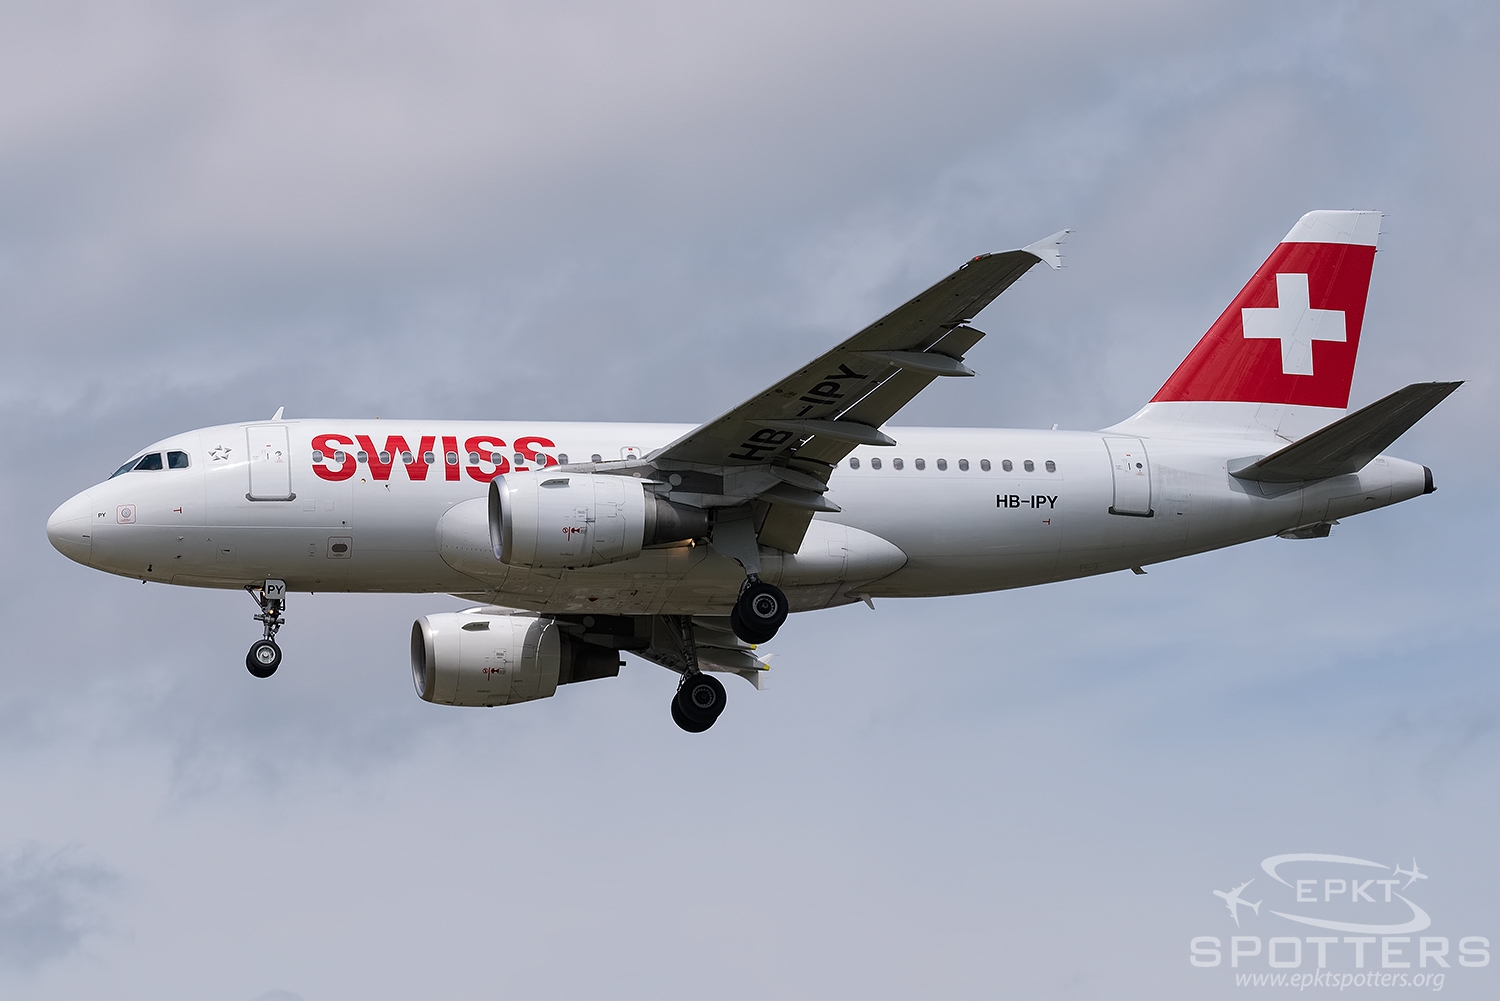 HB-IPY - Airbus A319 -111 (Swiss International Air Lines) / Heathrow - London United Kingdom [EGLL/LHR]